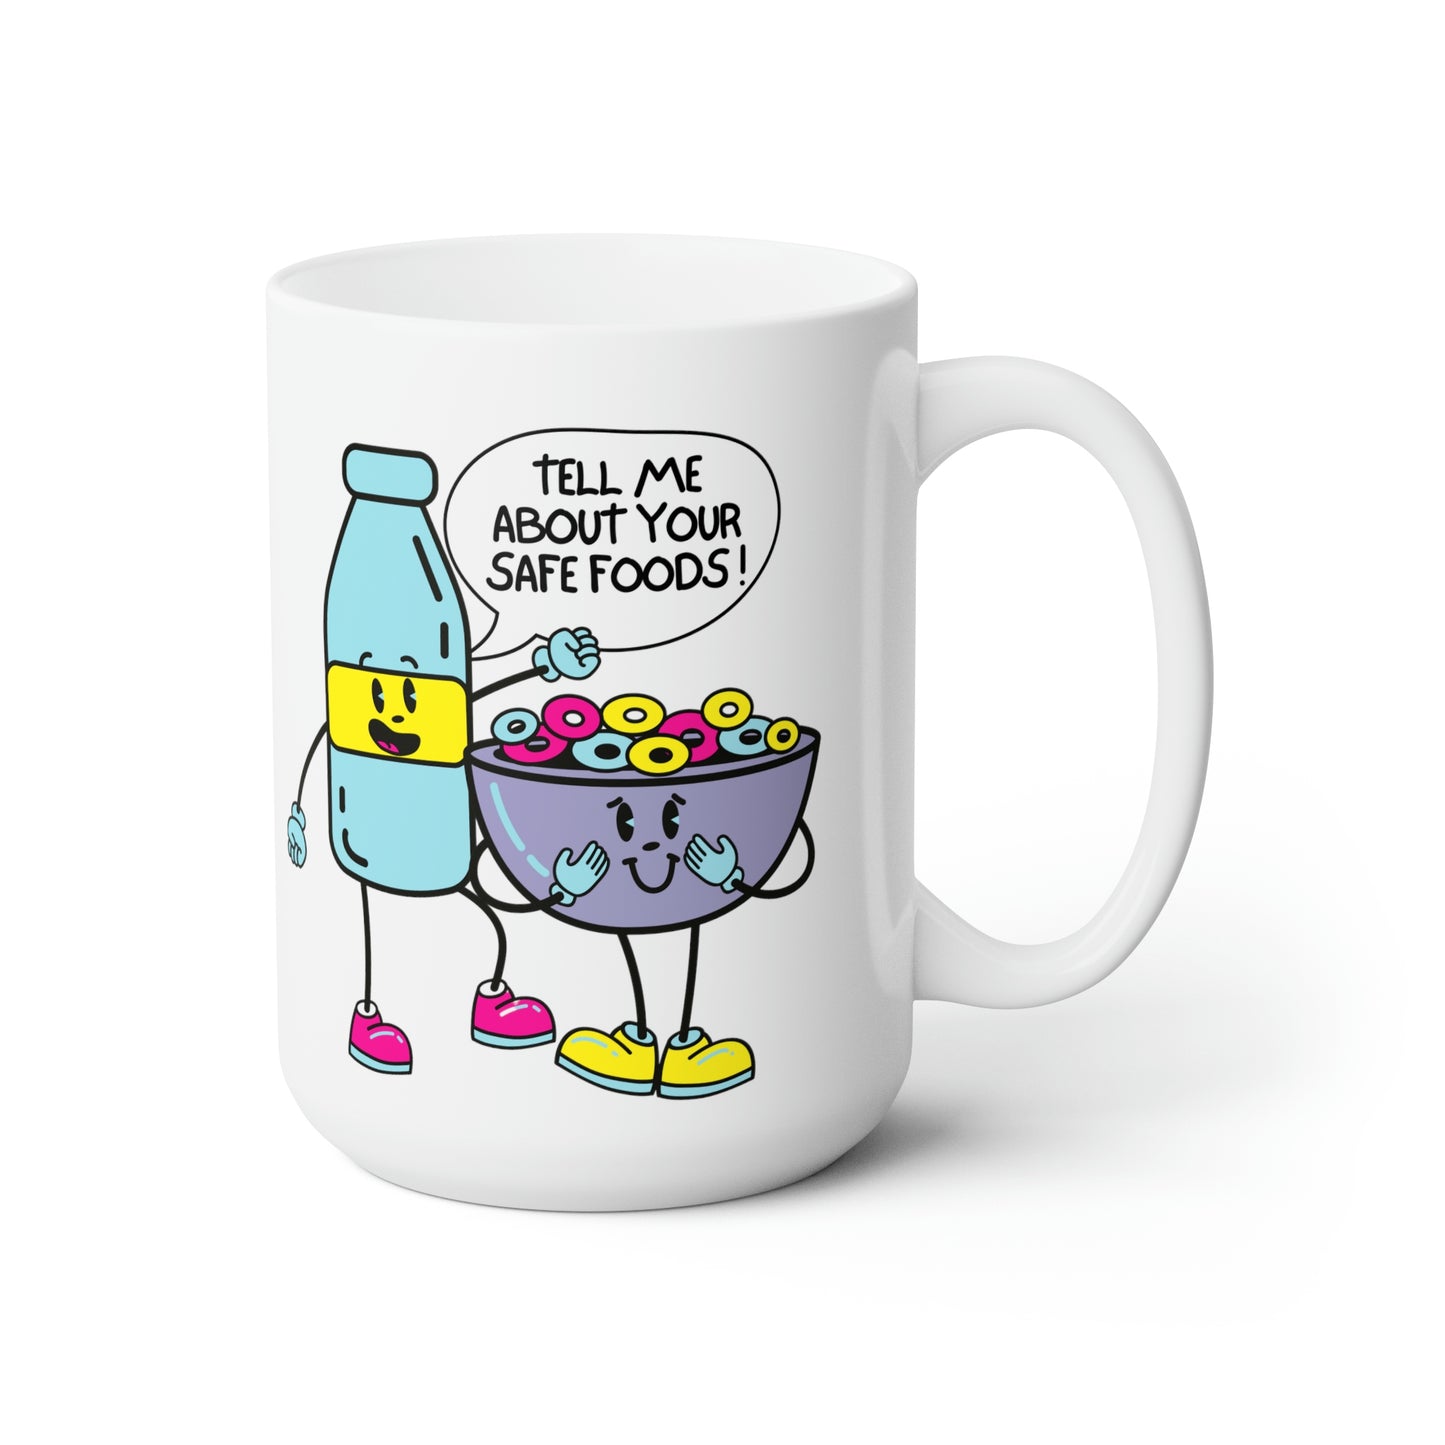 "Tell Me About Your Safe Foods!" Ceramic Mug 15oz